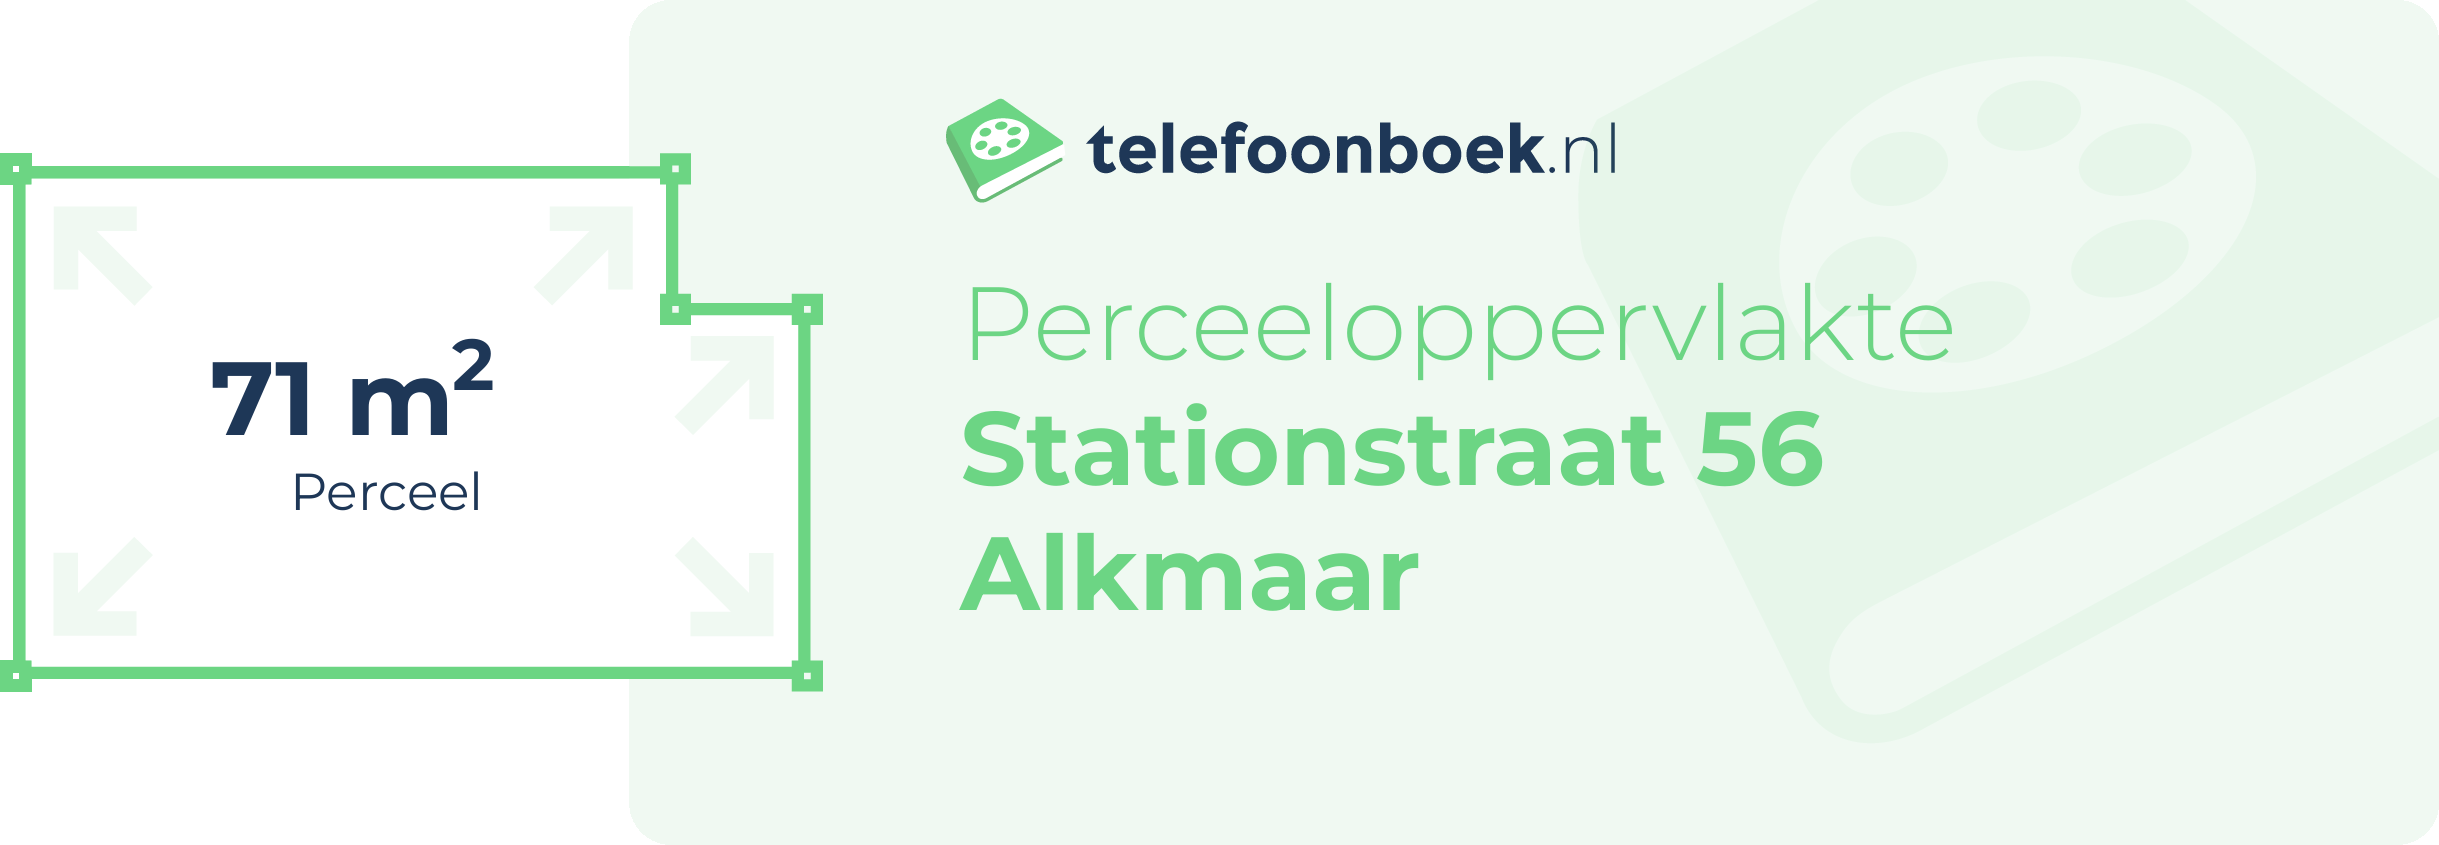 Perceeloppervlakte Stationstraat 56 Alkmaar